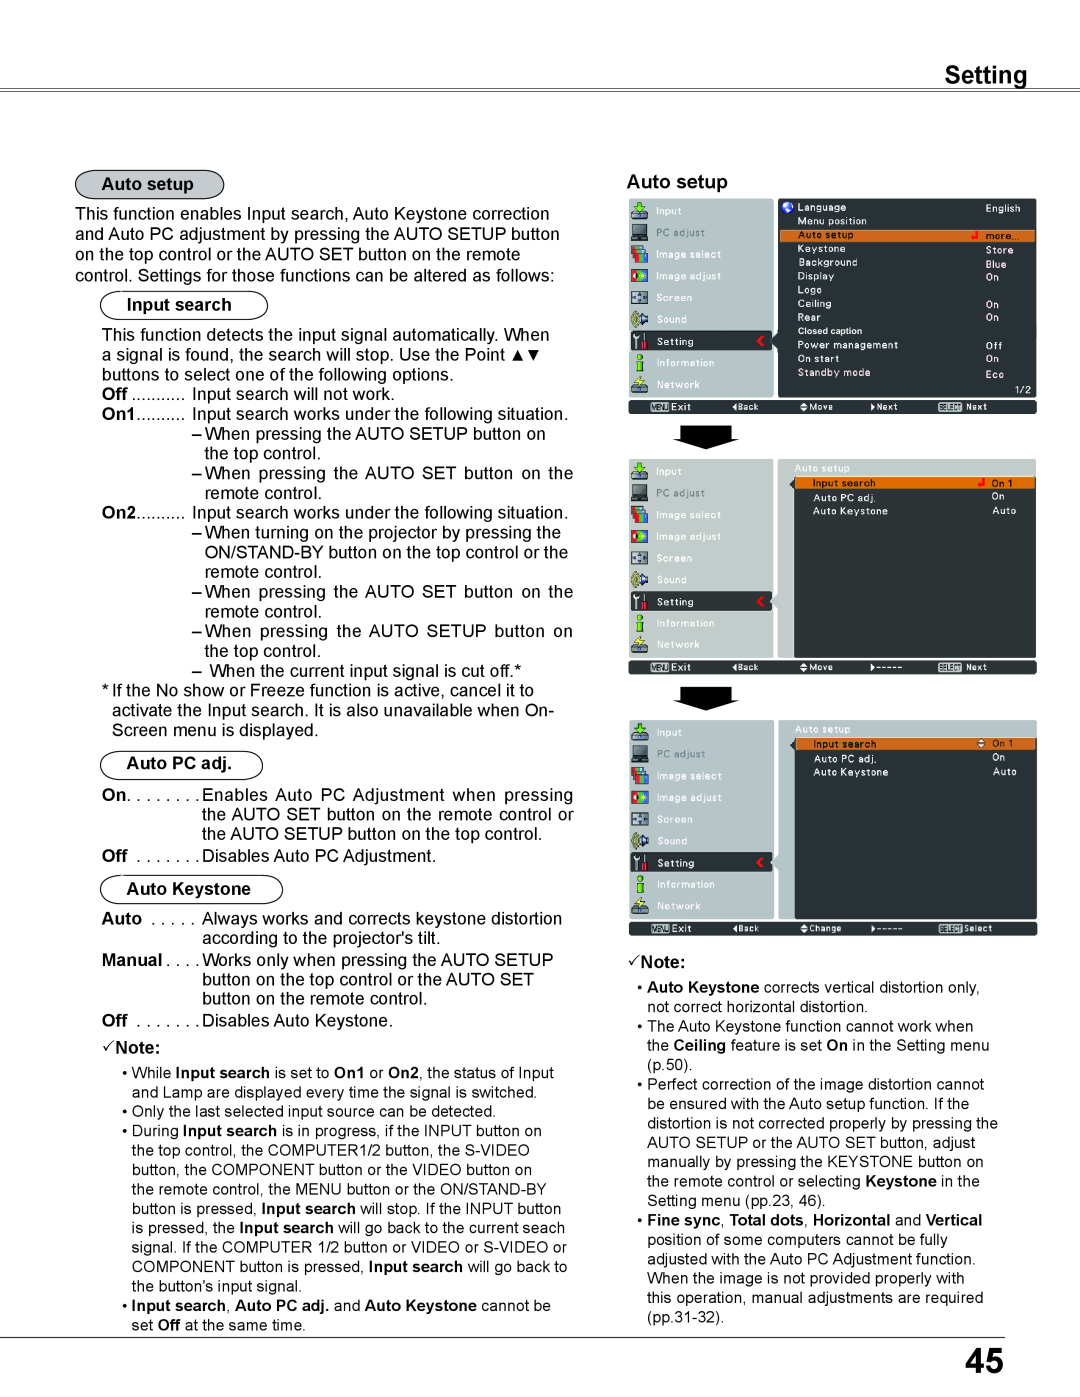 Sanyo PLC-XC56 owner manual Setting, Auto setup, Input search, Auto PC adj, Auto Keystone, Note 